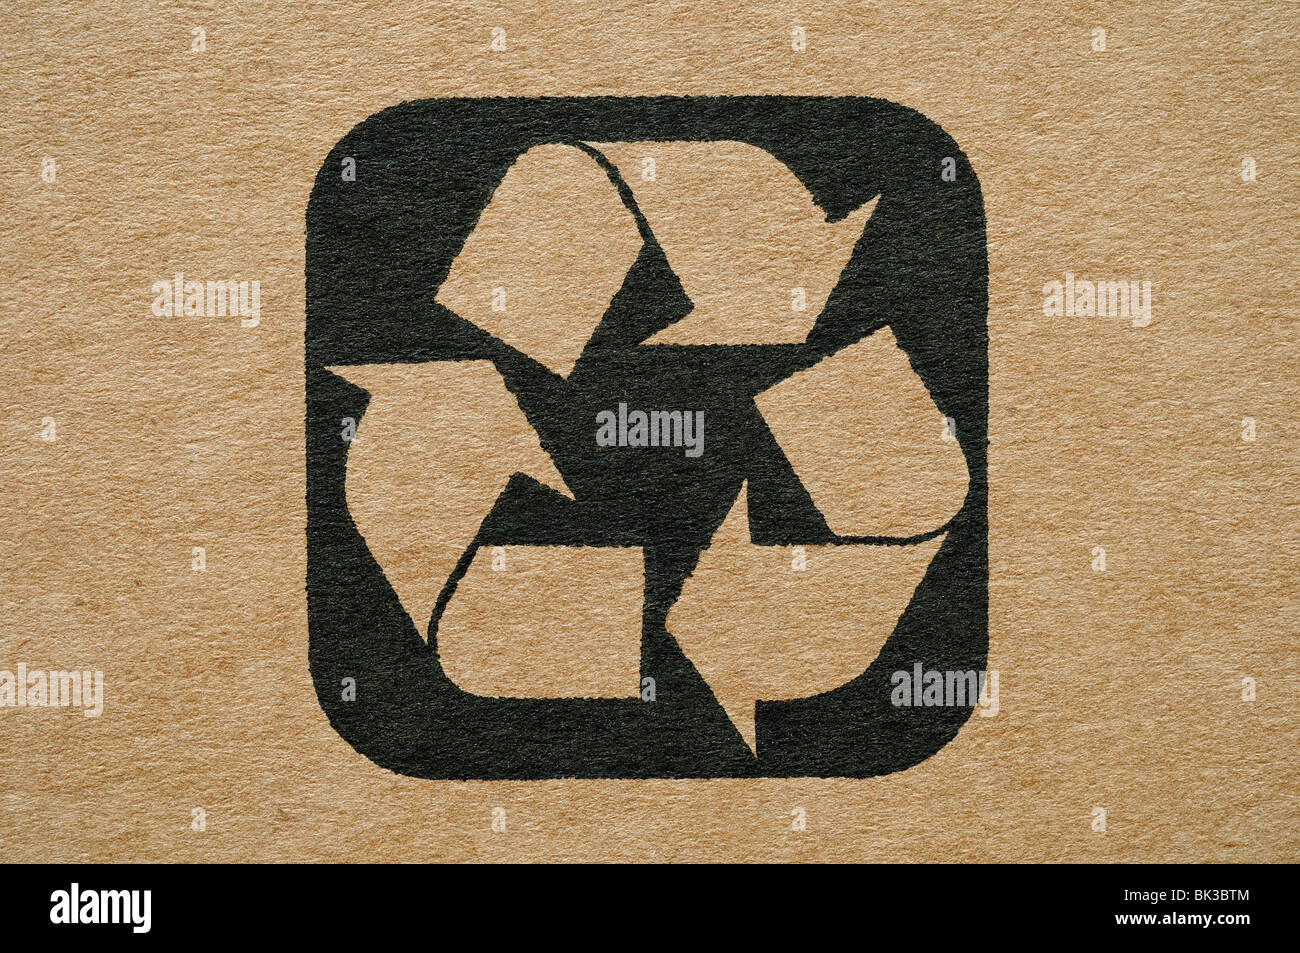 Symbole de recyclage de carton Banque D'Images